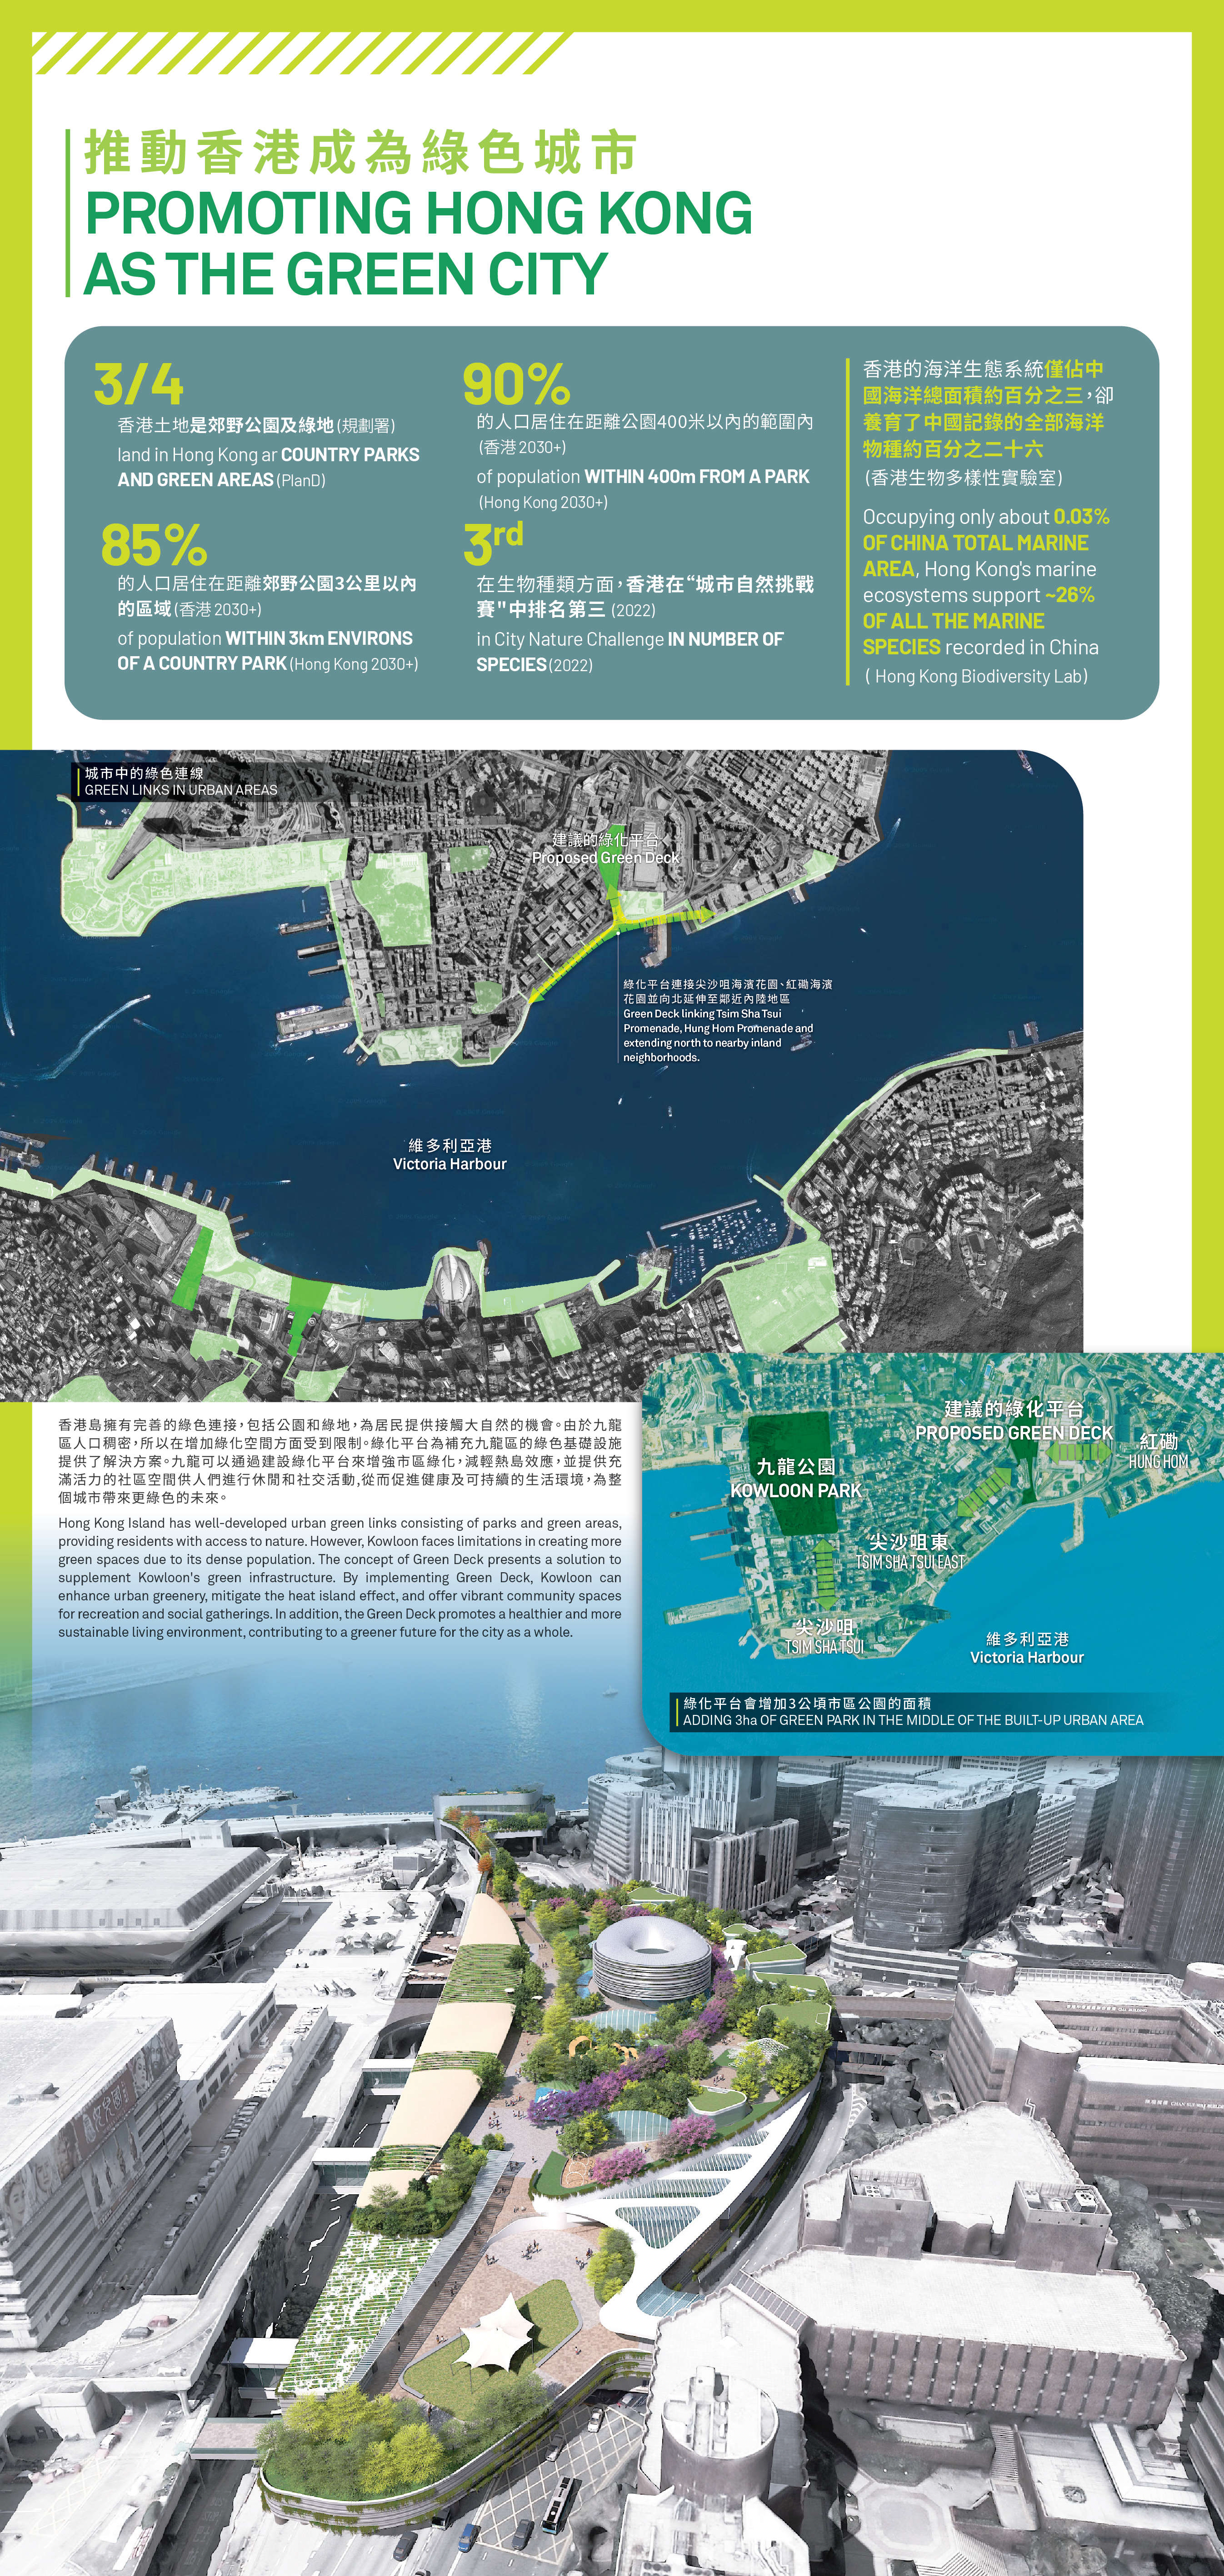 4. Promoting Hong Kong as the green city